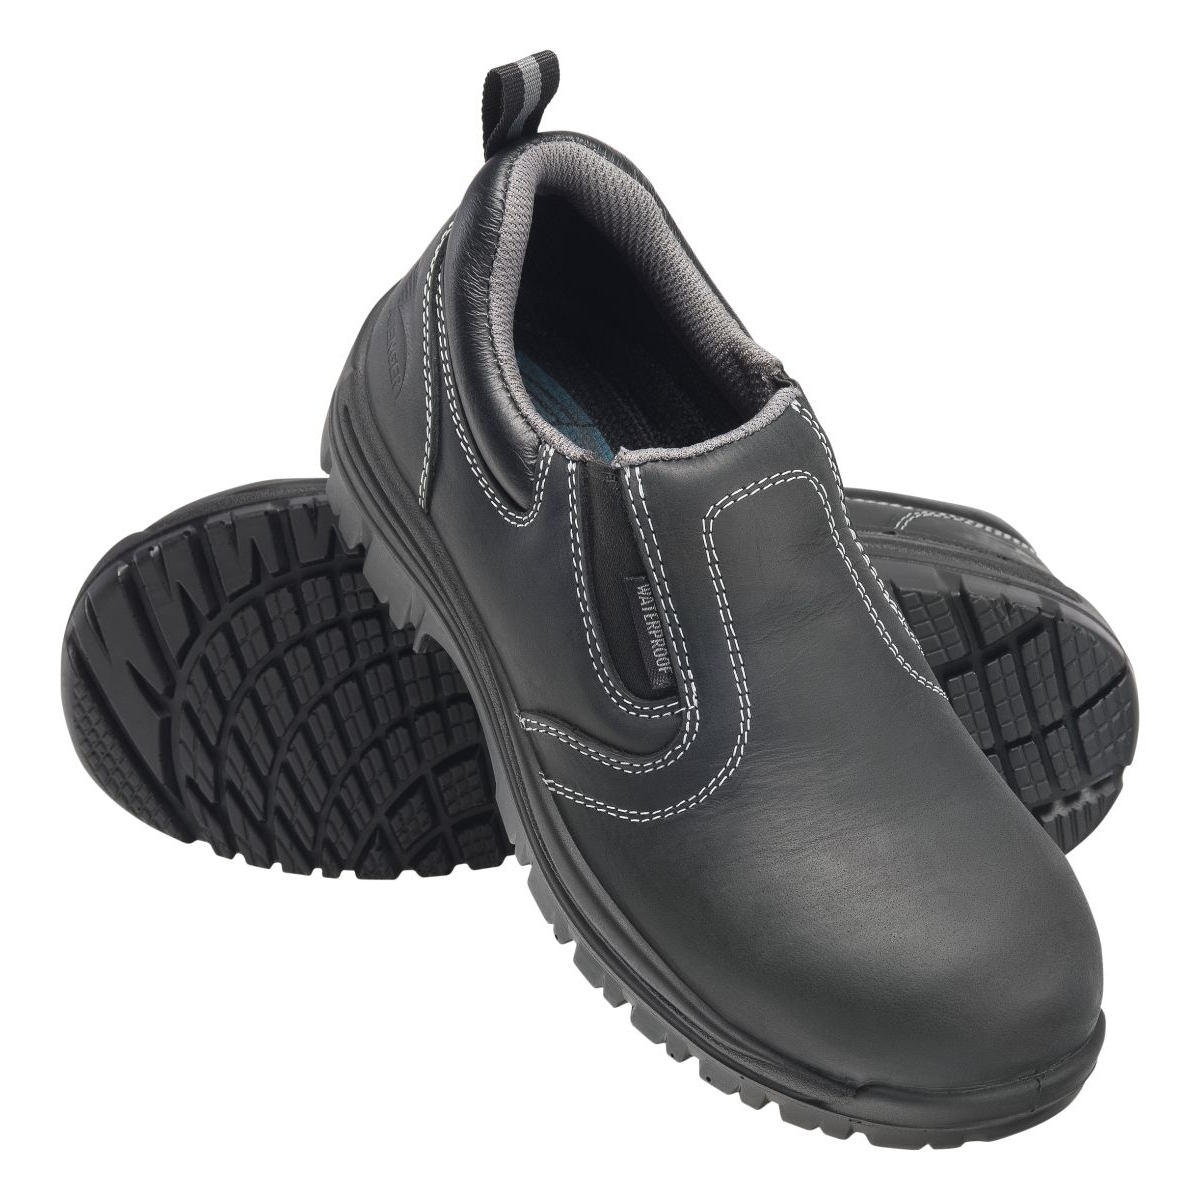 FSI FOOTWEAR SPECIALTIES INTERNATIONAL NAUTILUS Avenger Women's Foreman Slip-On Composite Toe PR Work Shoes Black - A7169 - BLACK, 9-W